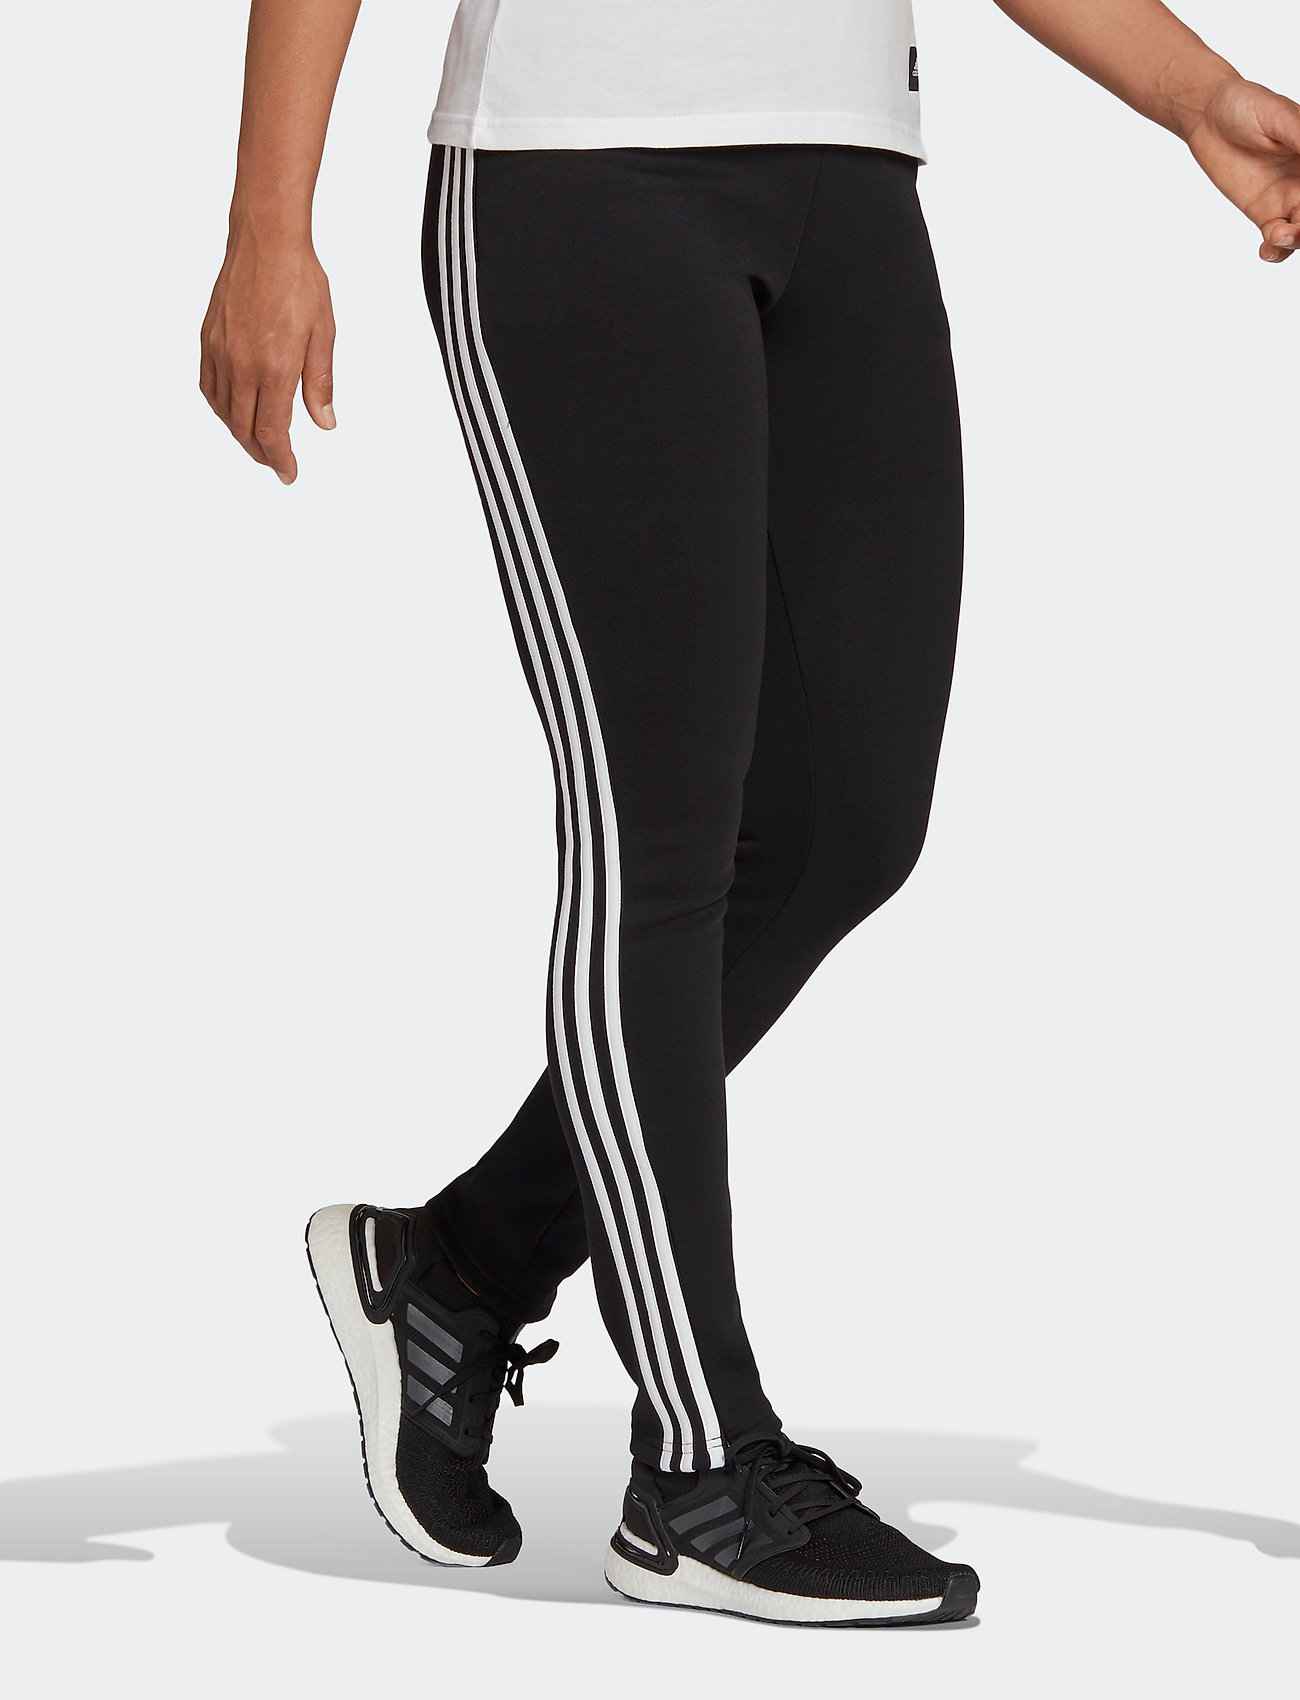 Future - W 3-stripes Icons adidas Pants Skinny Sportswear Sweatpants Sportswear